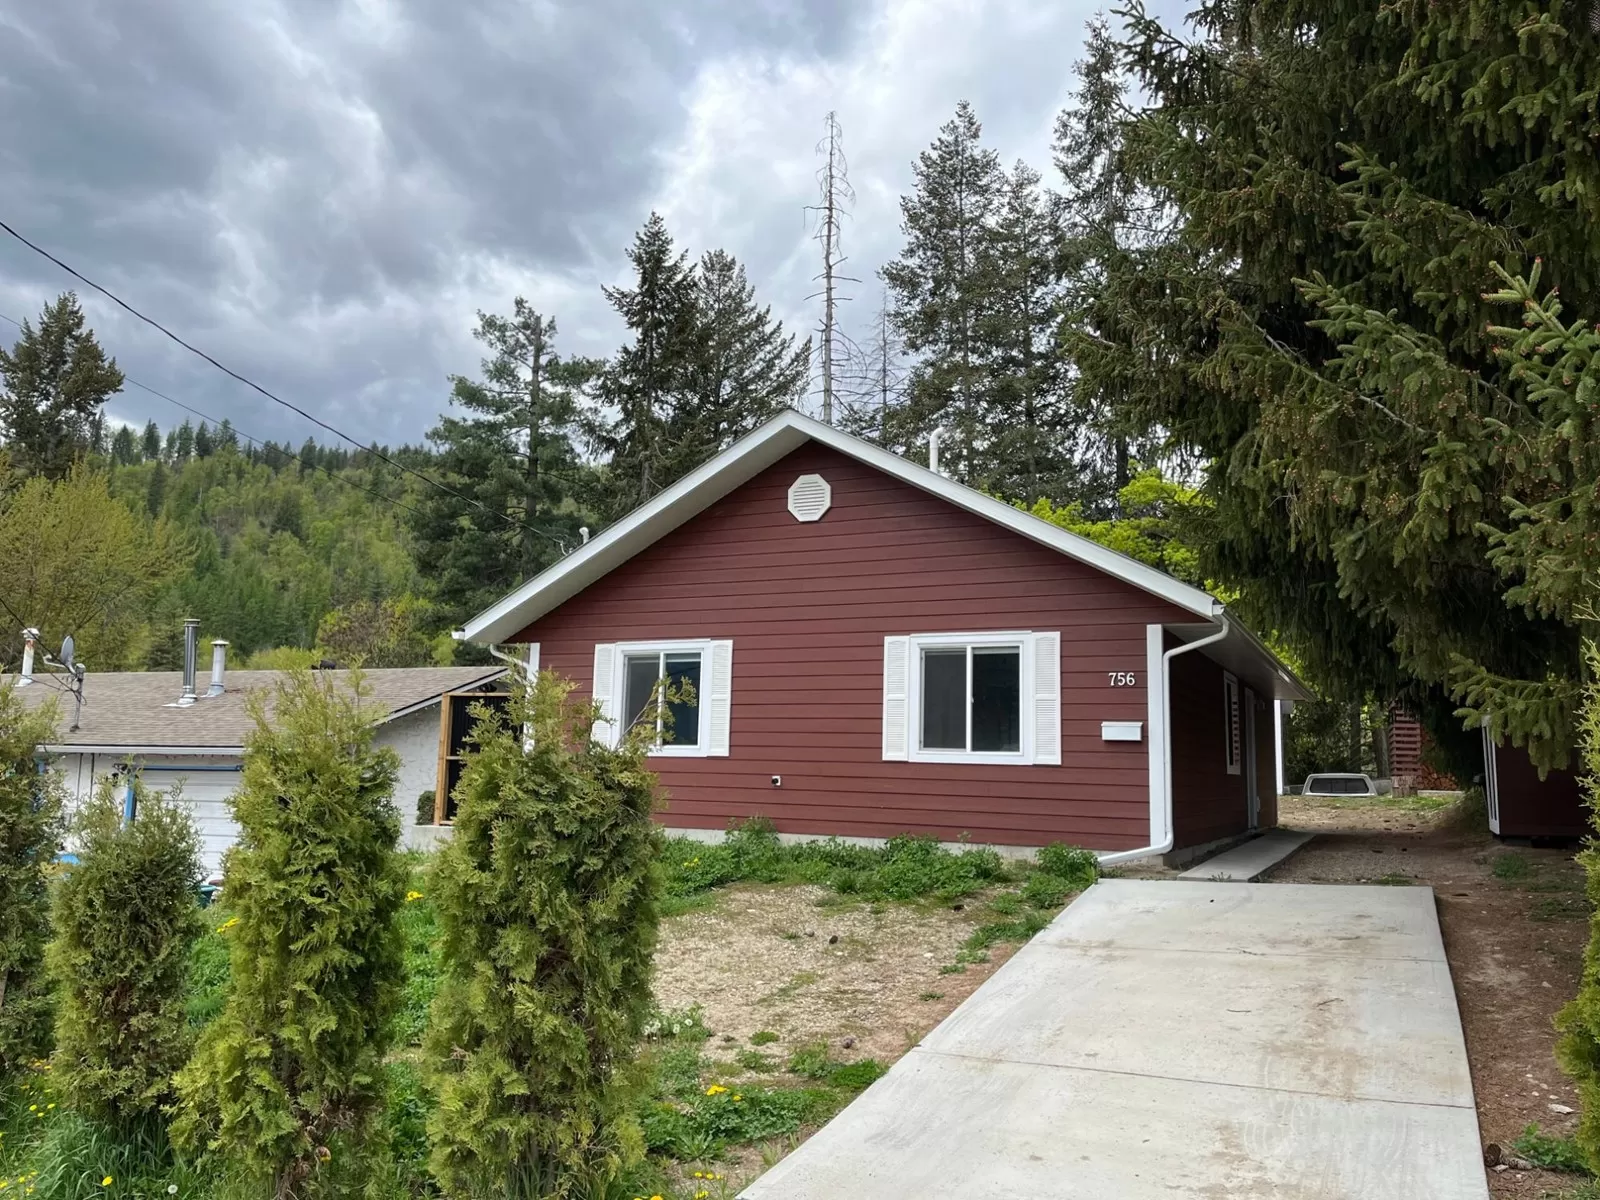 House for rent: 756 10th Avenue, Castlegar, British Columbia V1N 1K9